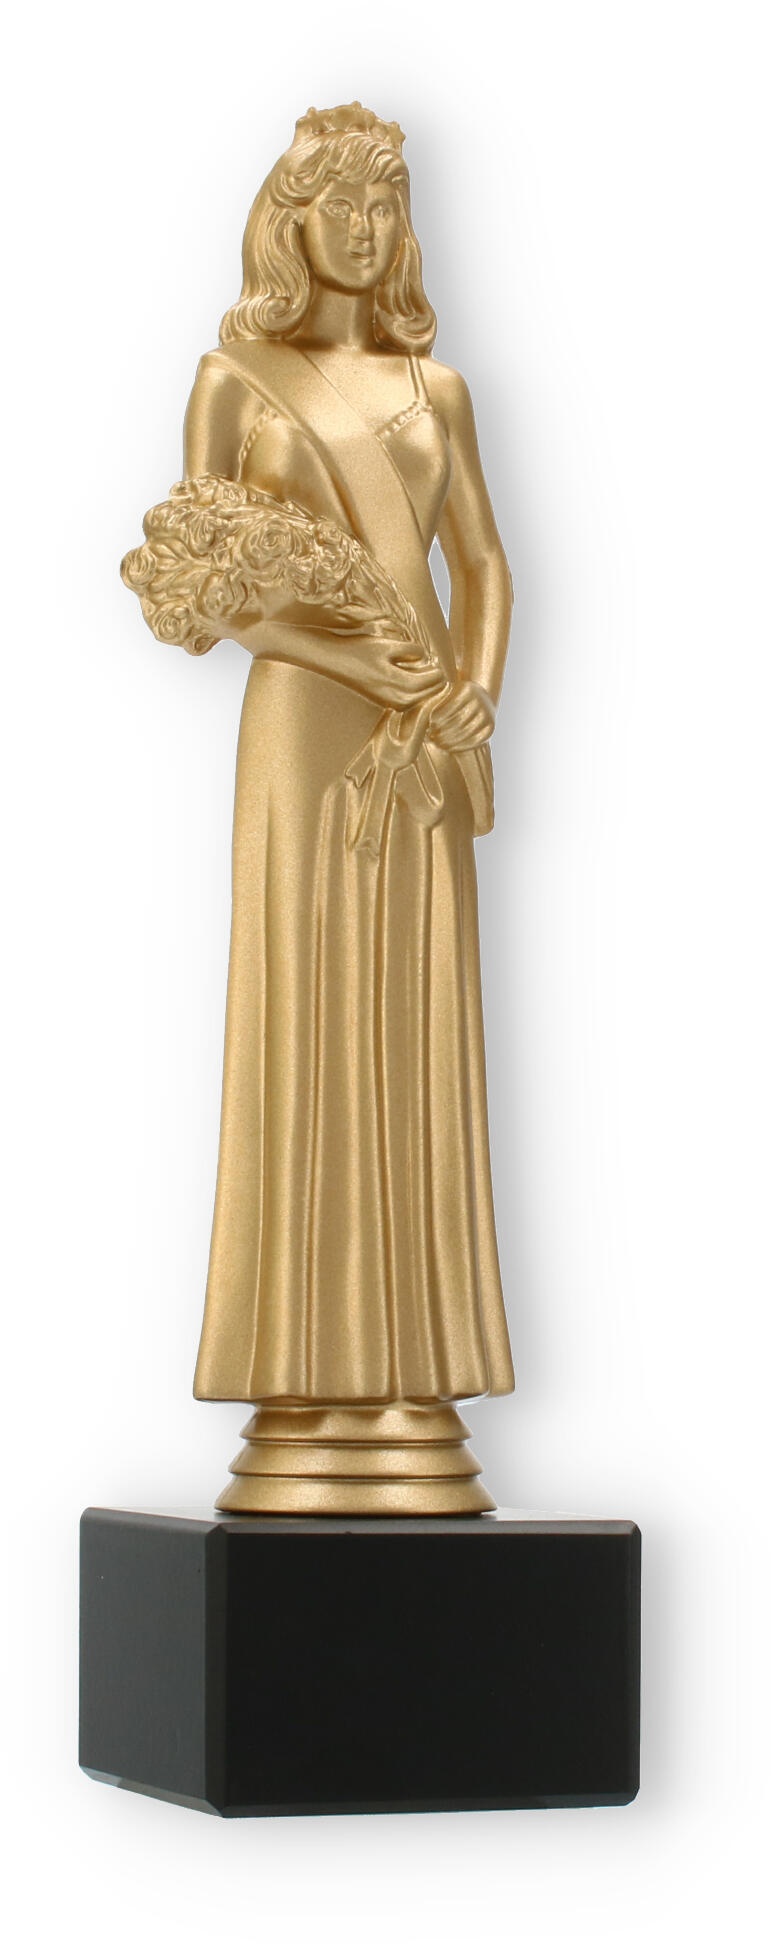 Pokal Kunststofffigur Schönheitskönigin goldmetallic auf schwarzem Marmorsockel 24,7cm